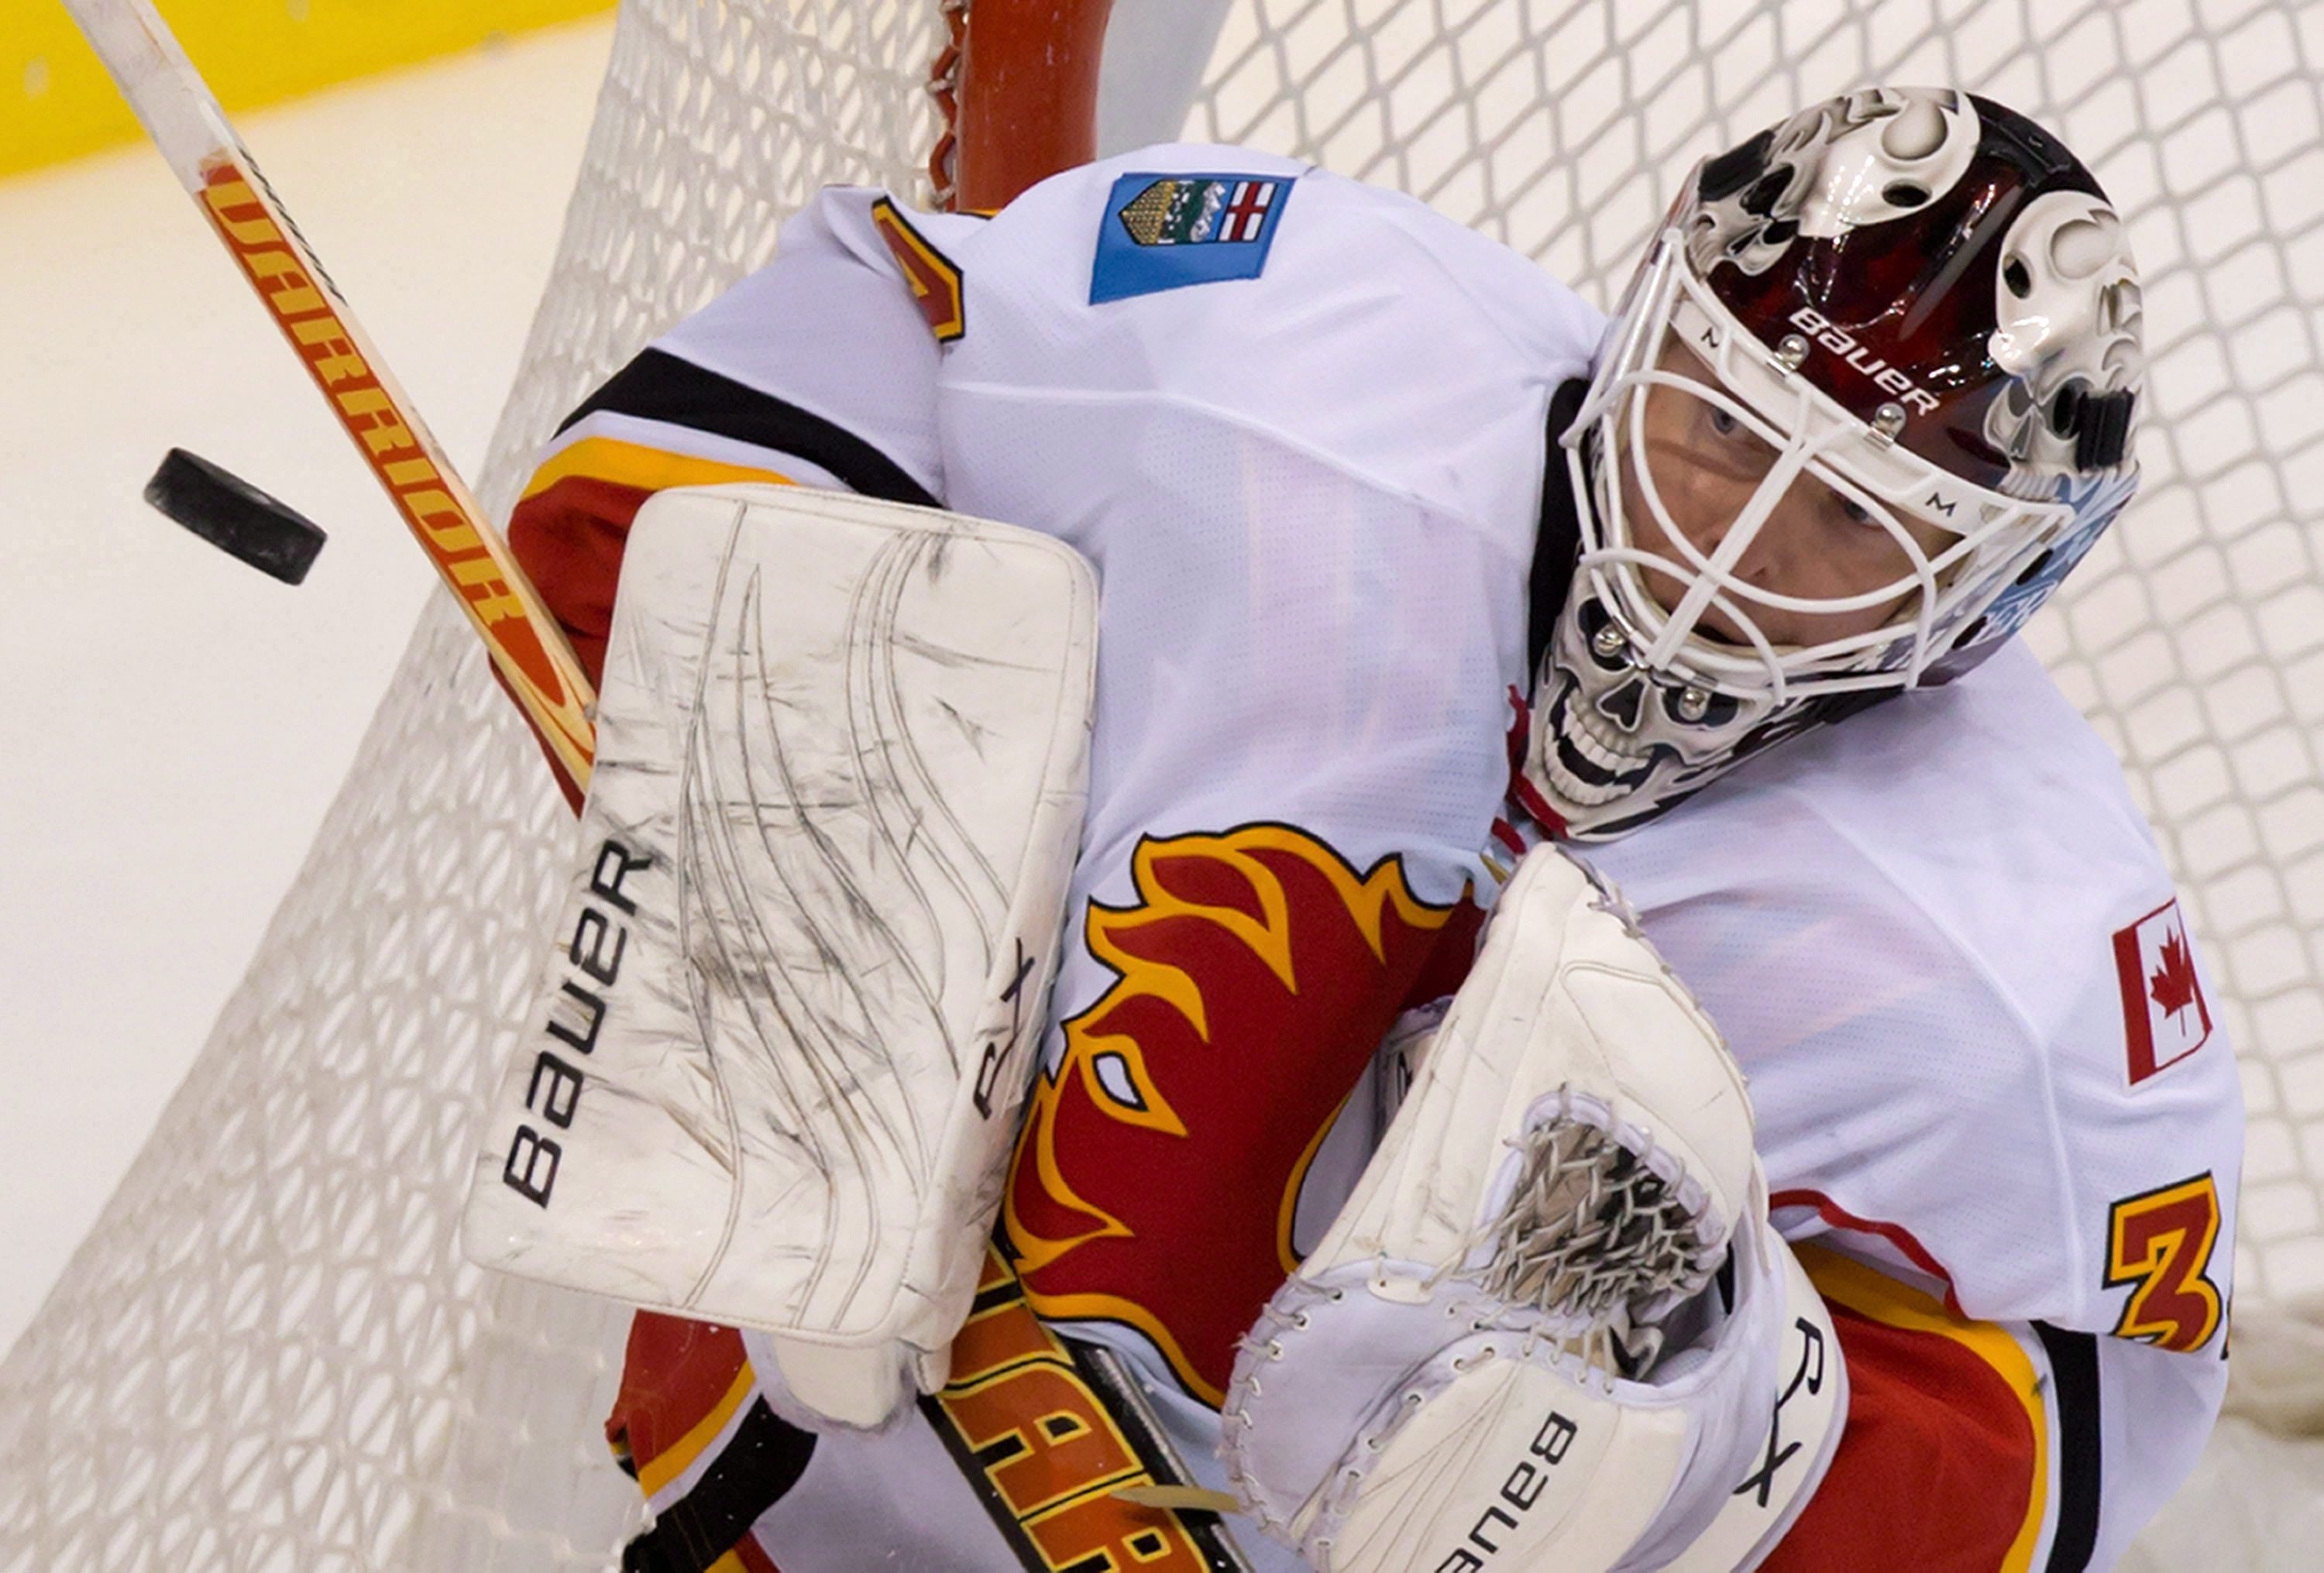 Calgary Flames' goalie Miikka Kiprusoff. Photo: AP